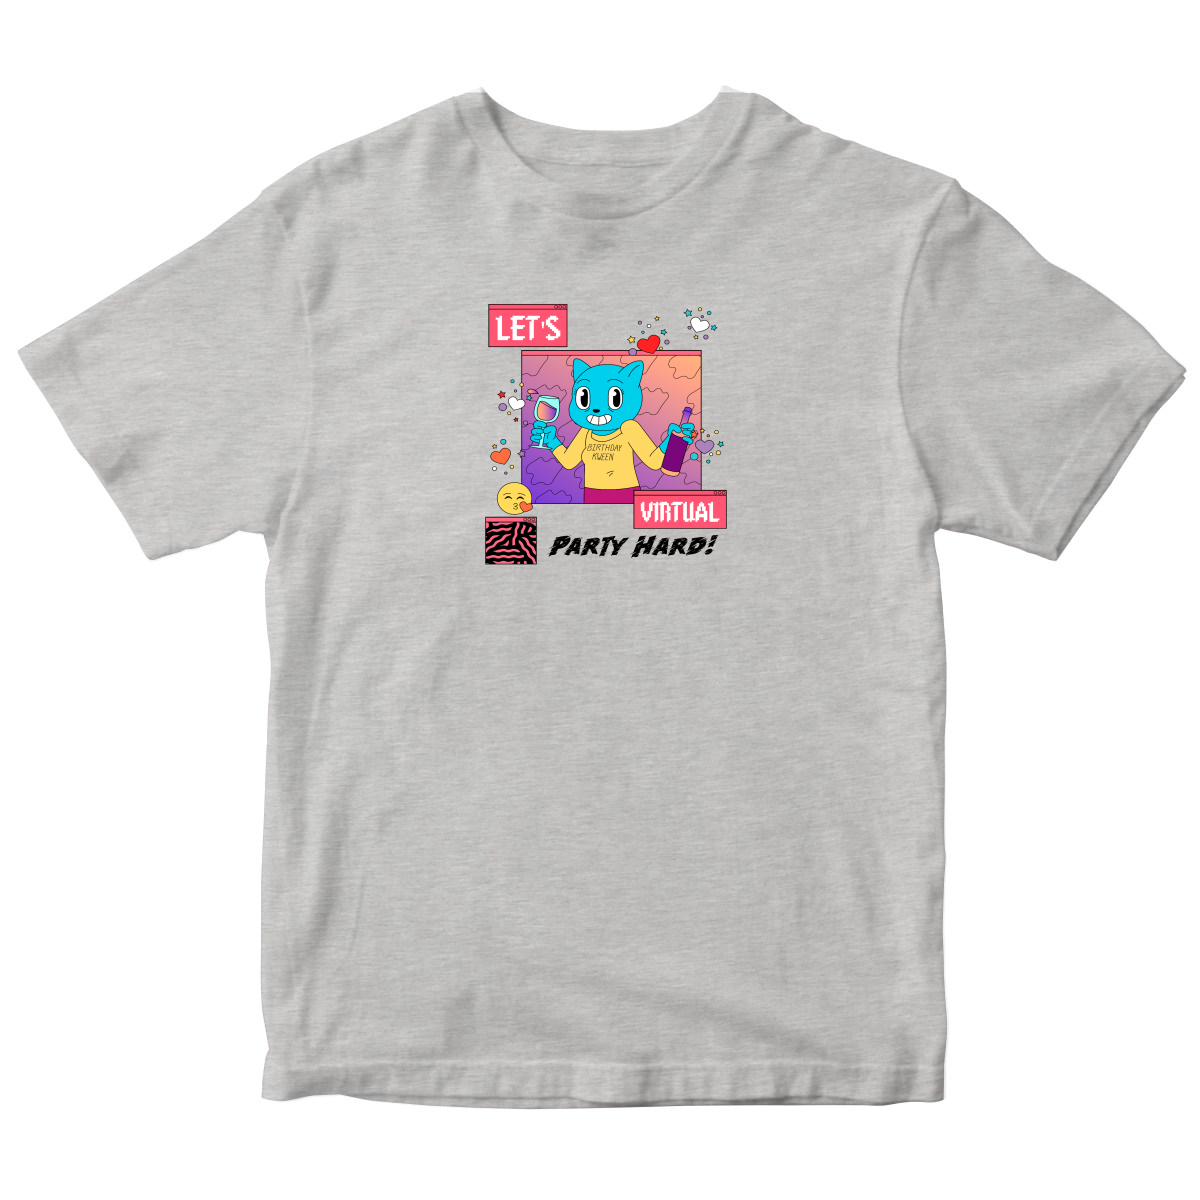 Let's Virtual Party Hard Toddler T-shirt | Gray